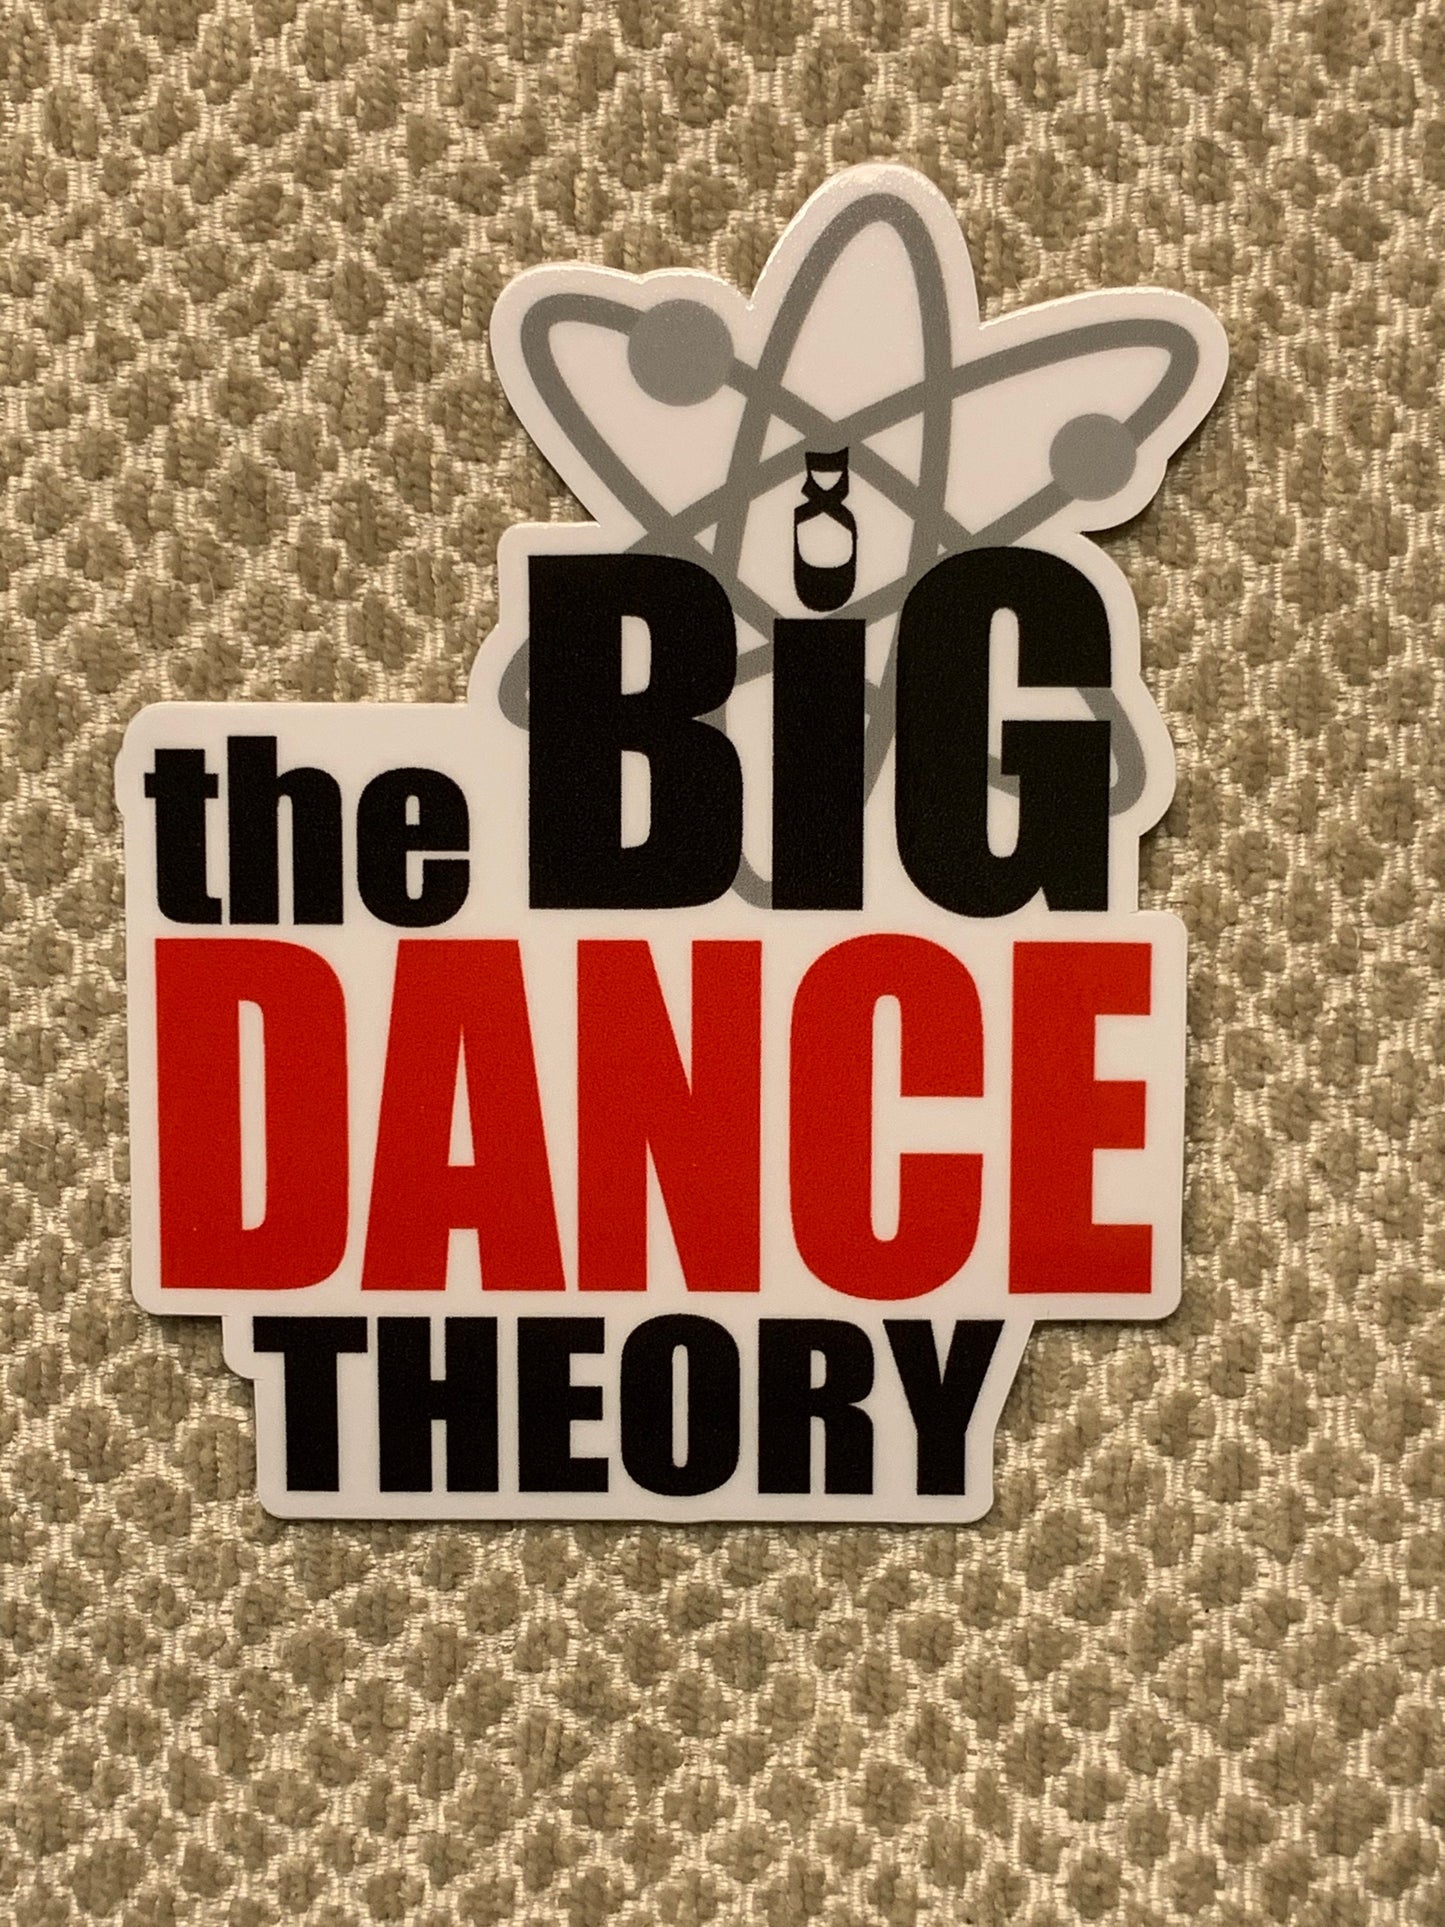 The Big Dance Theory Vinyl Sticker, Vinyl Decal, Laptop Sticker, Dance Sticker, Gifts For Dancers,